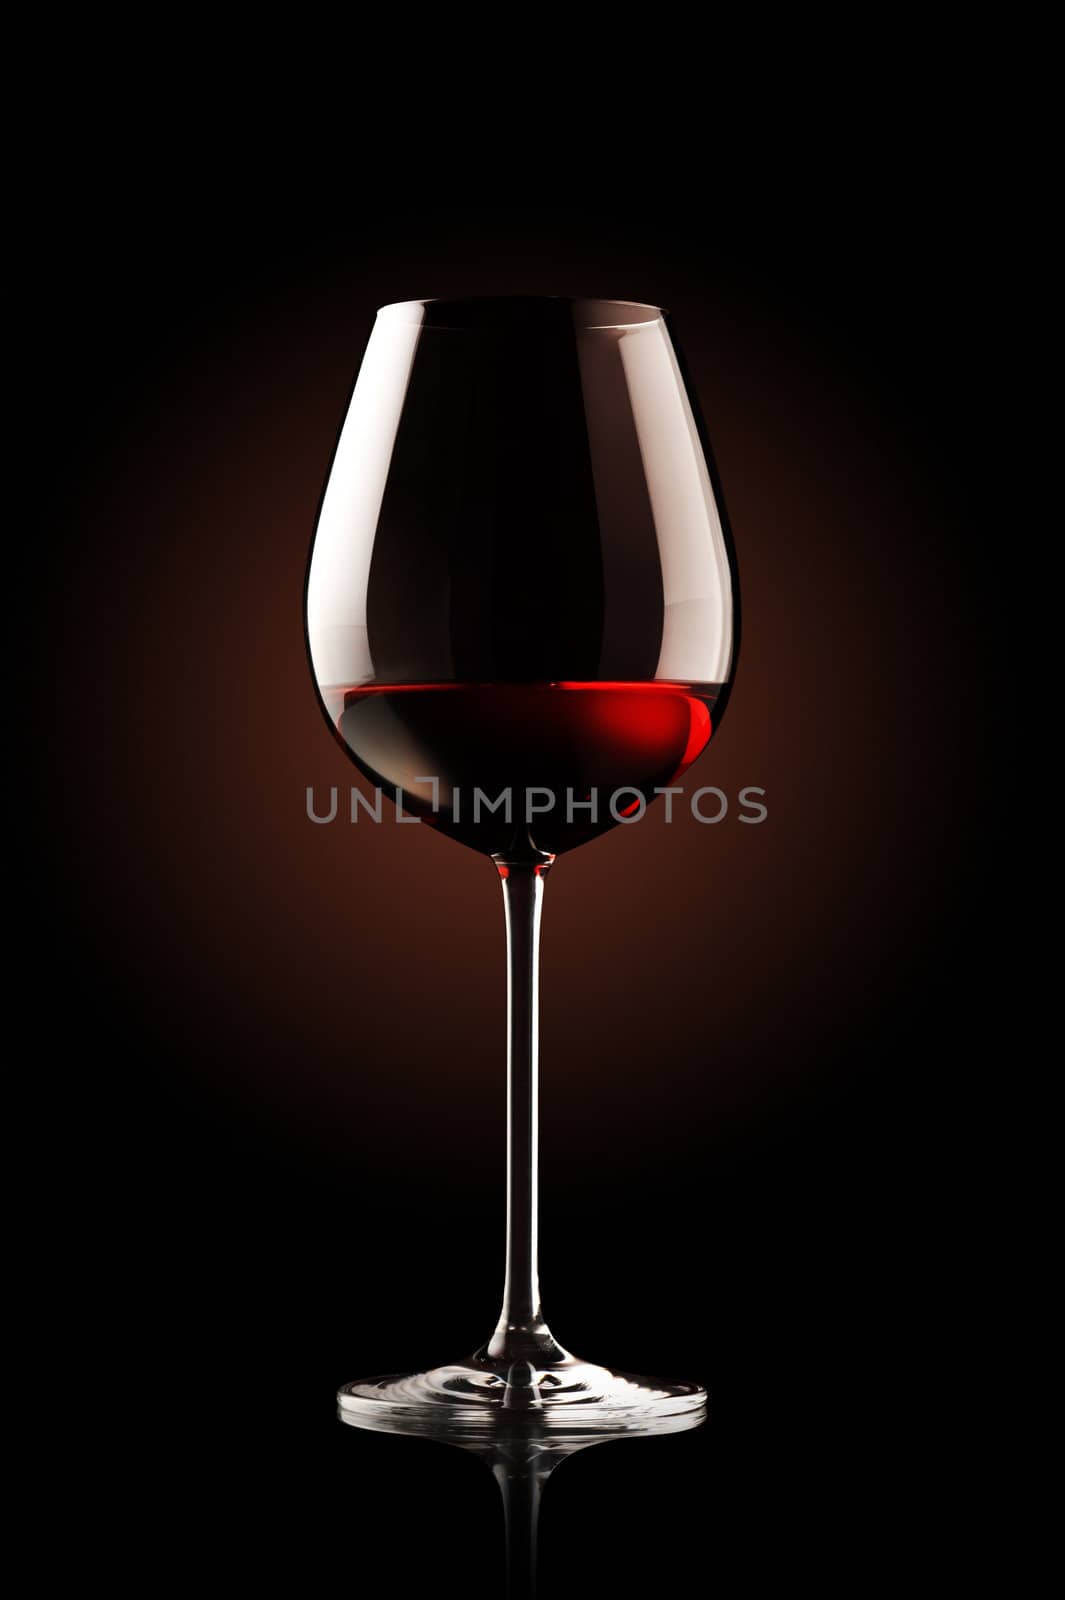 re wine glass on black background